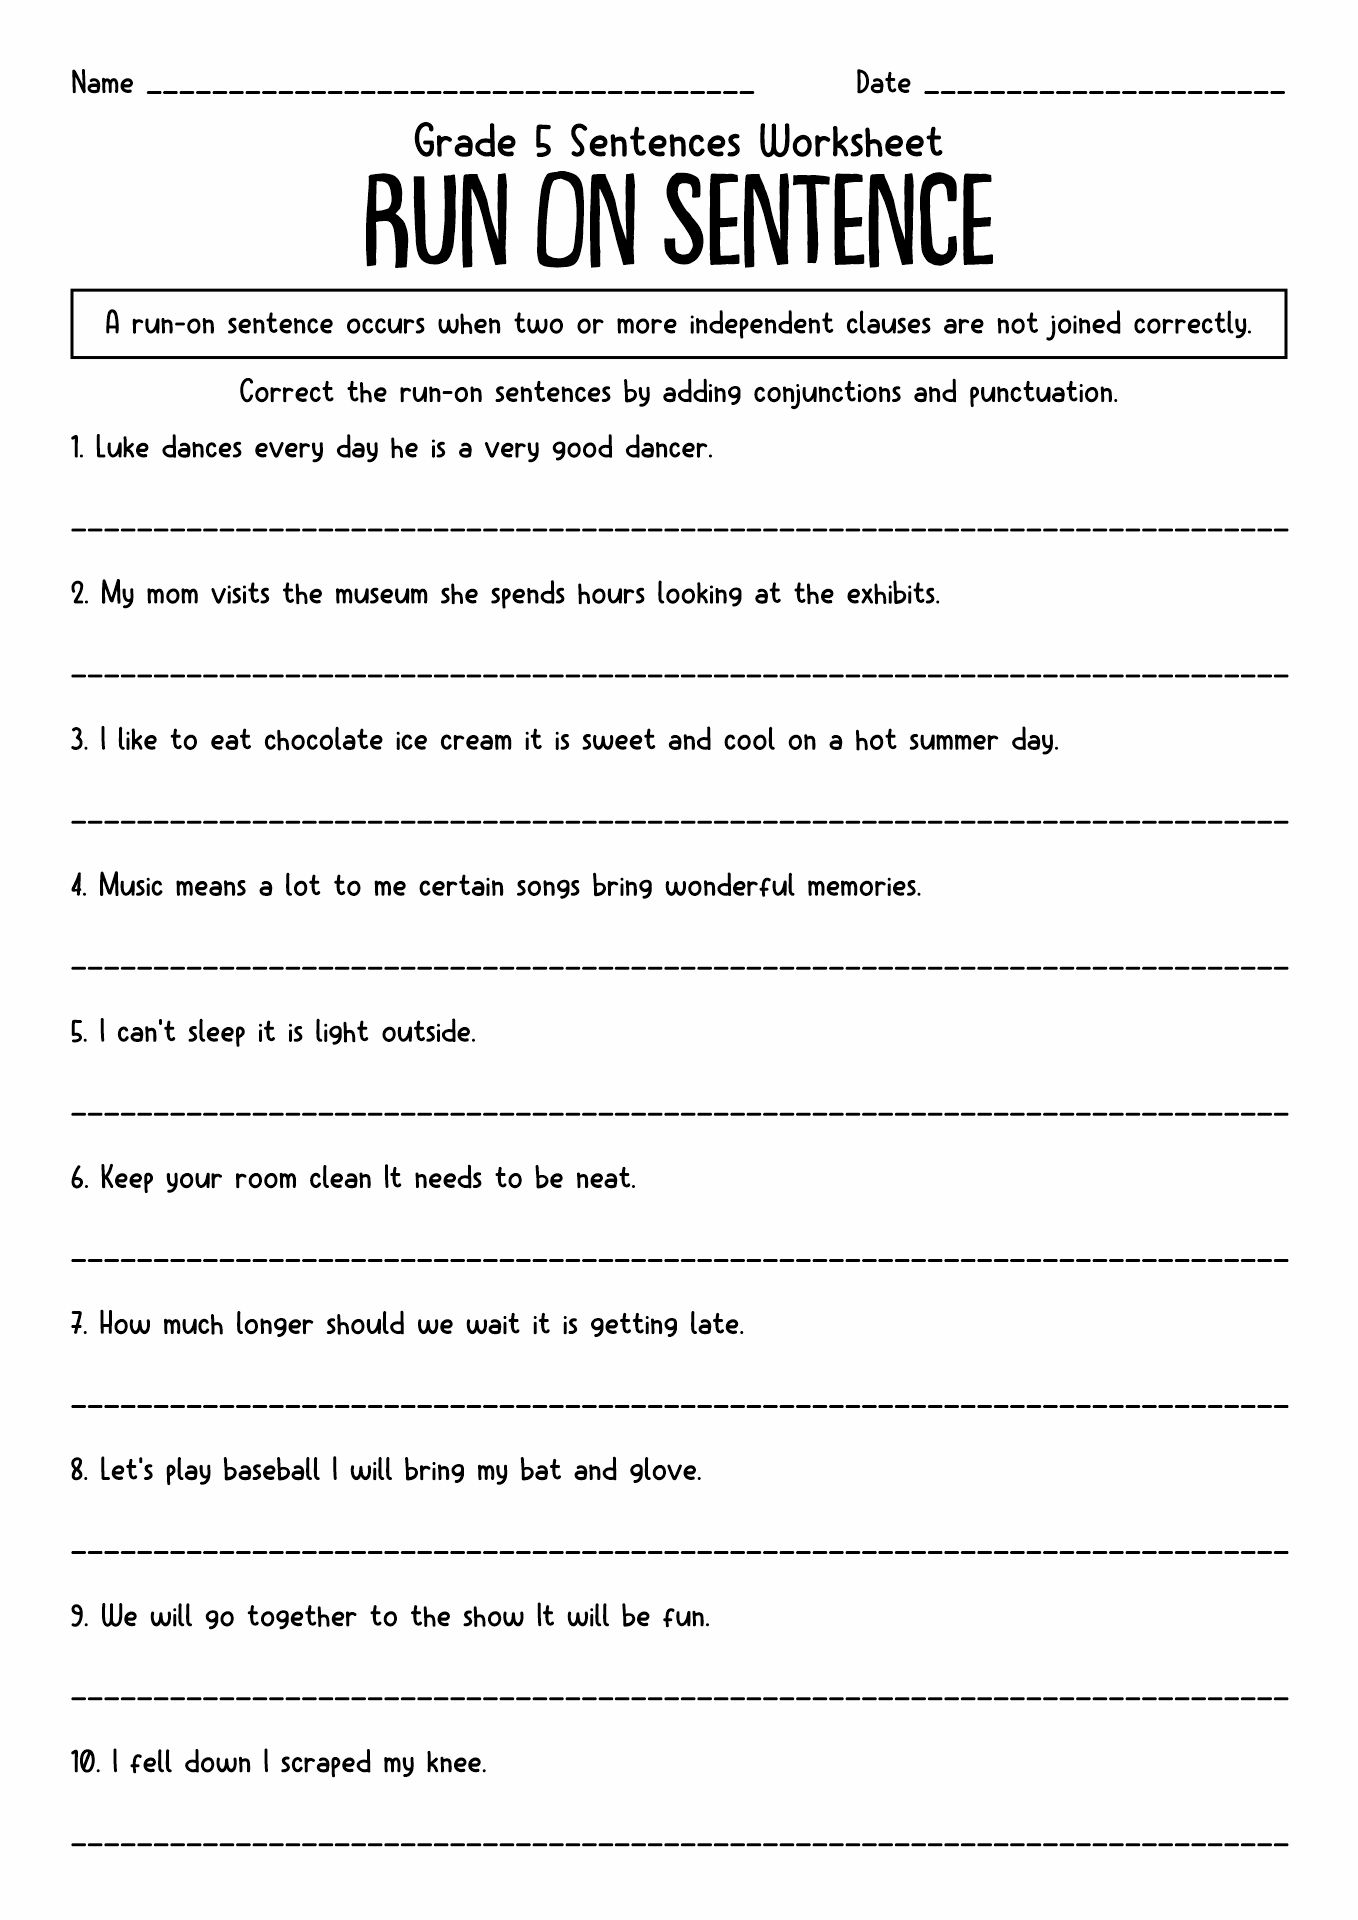 Run On Sentences Worksheets 3rd Grade Image